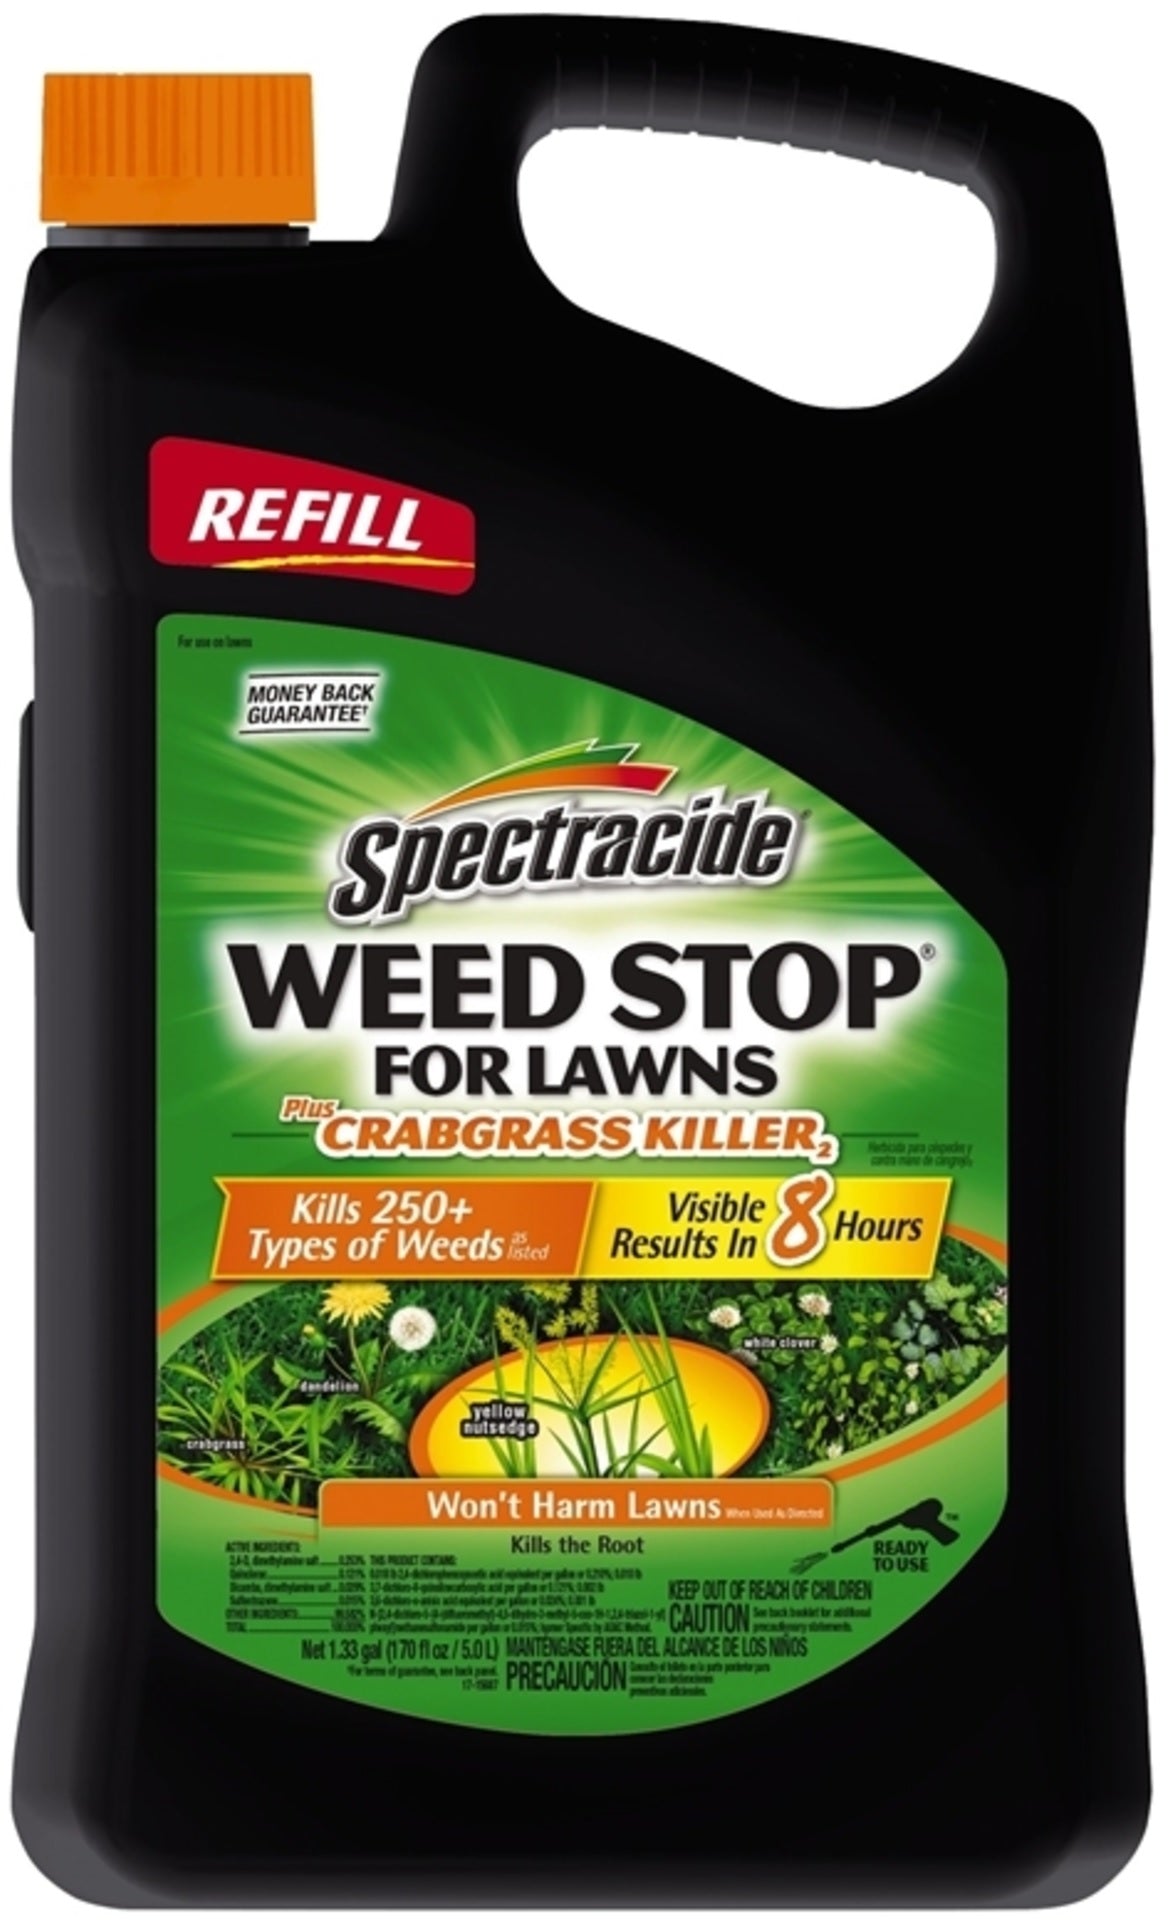 Spectracide HG-96589 Weed & Crabgrass Killer, 1.33 Gallon